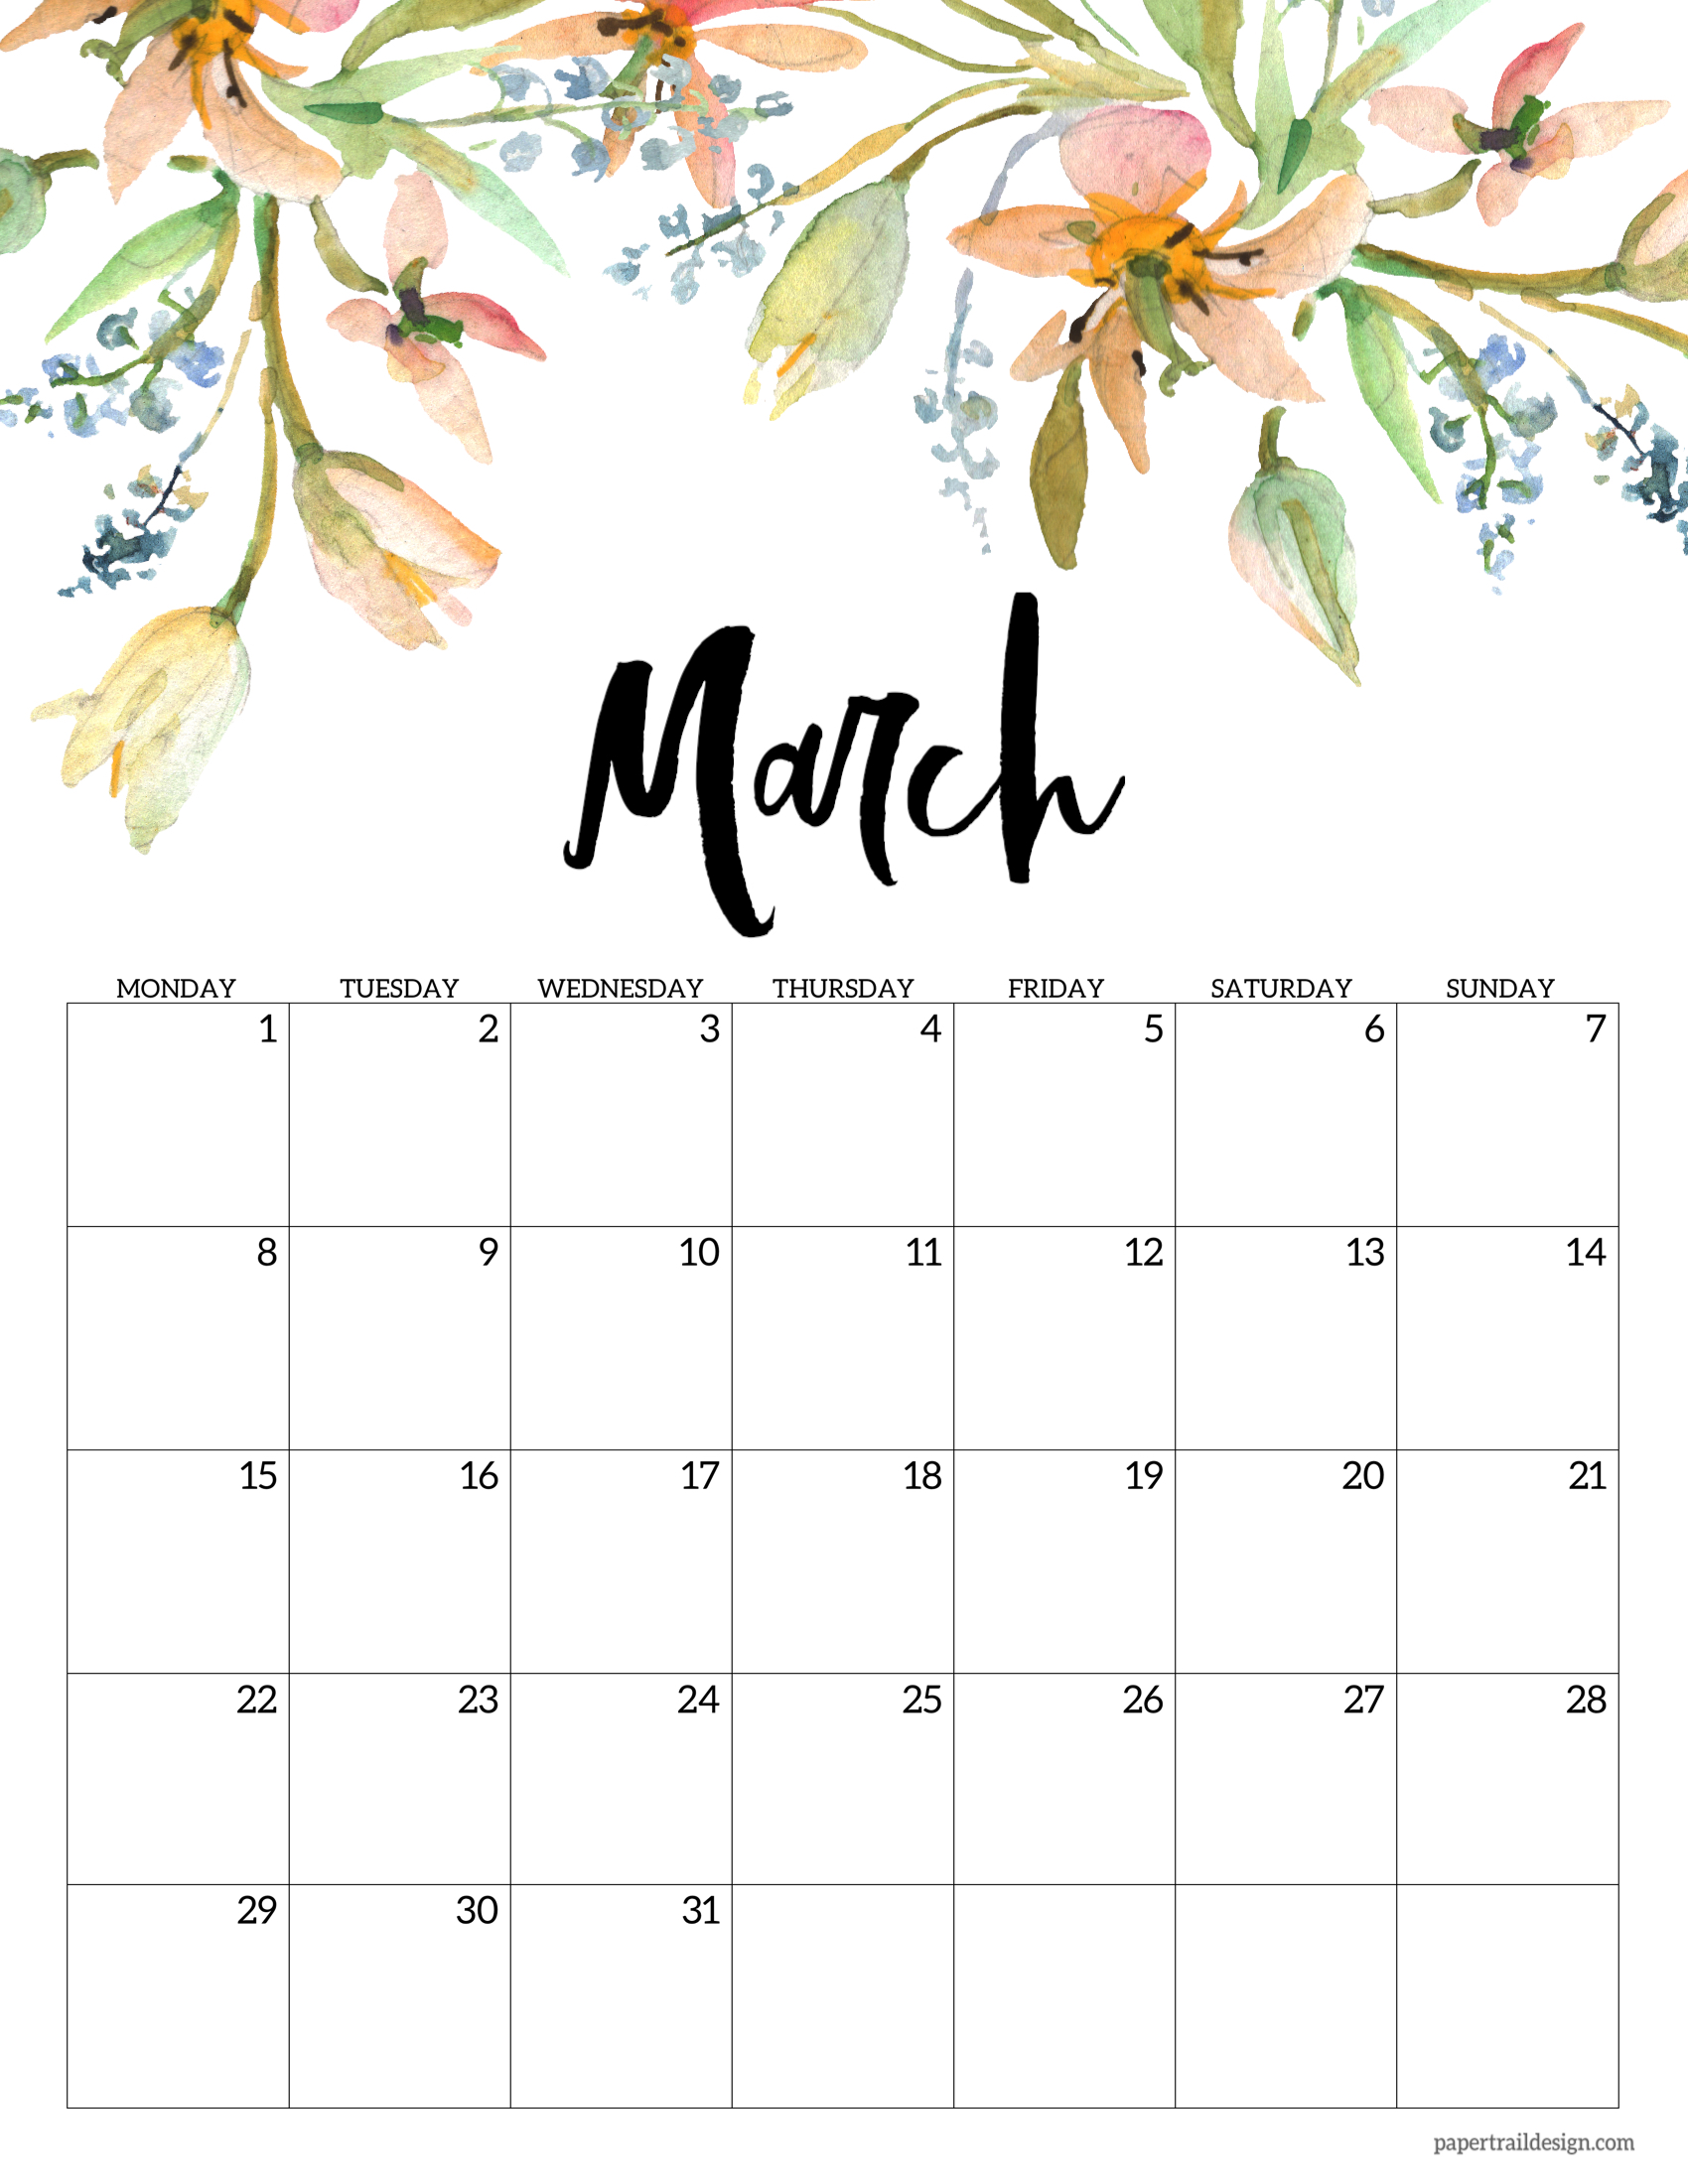 Free Printable 2021 Floral Calendar - Monday Start | Paper ...